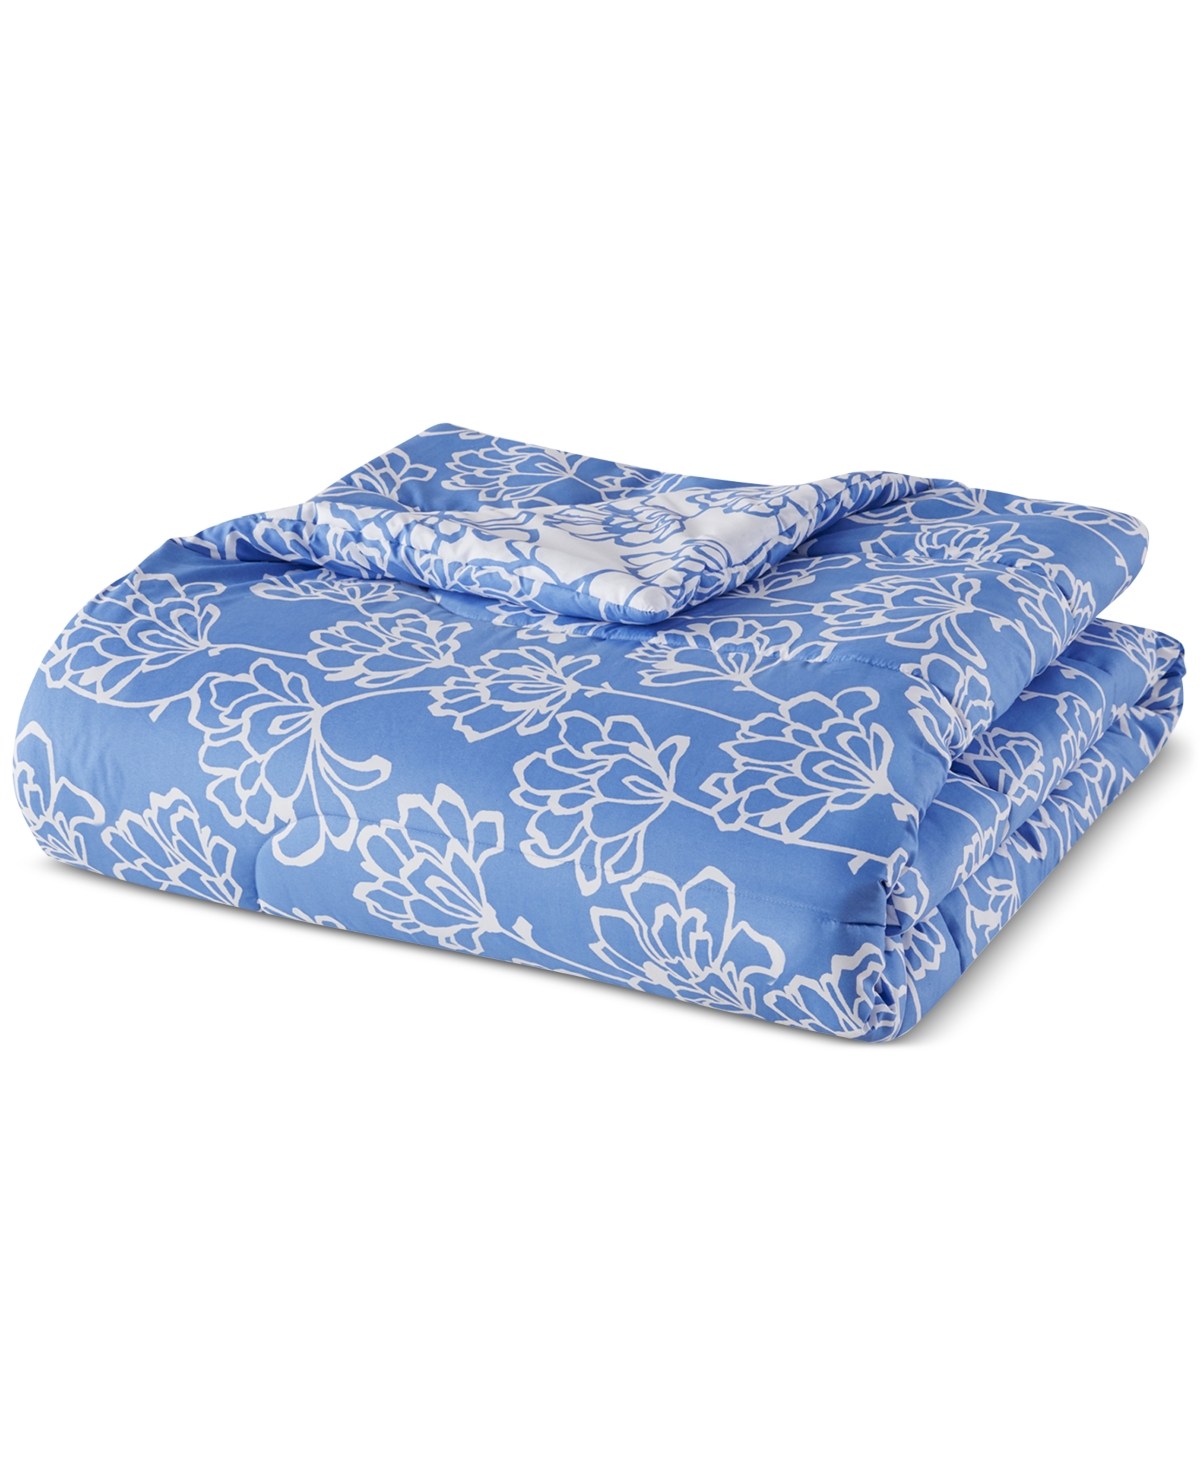 Shop Jla Home Taj 3-pc. Reversible Printed Comforter Set, Created For Macy's In Blue